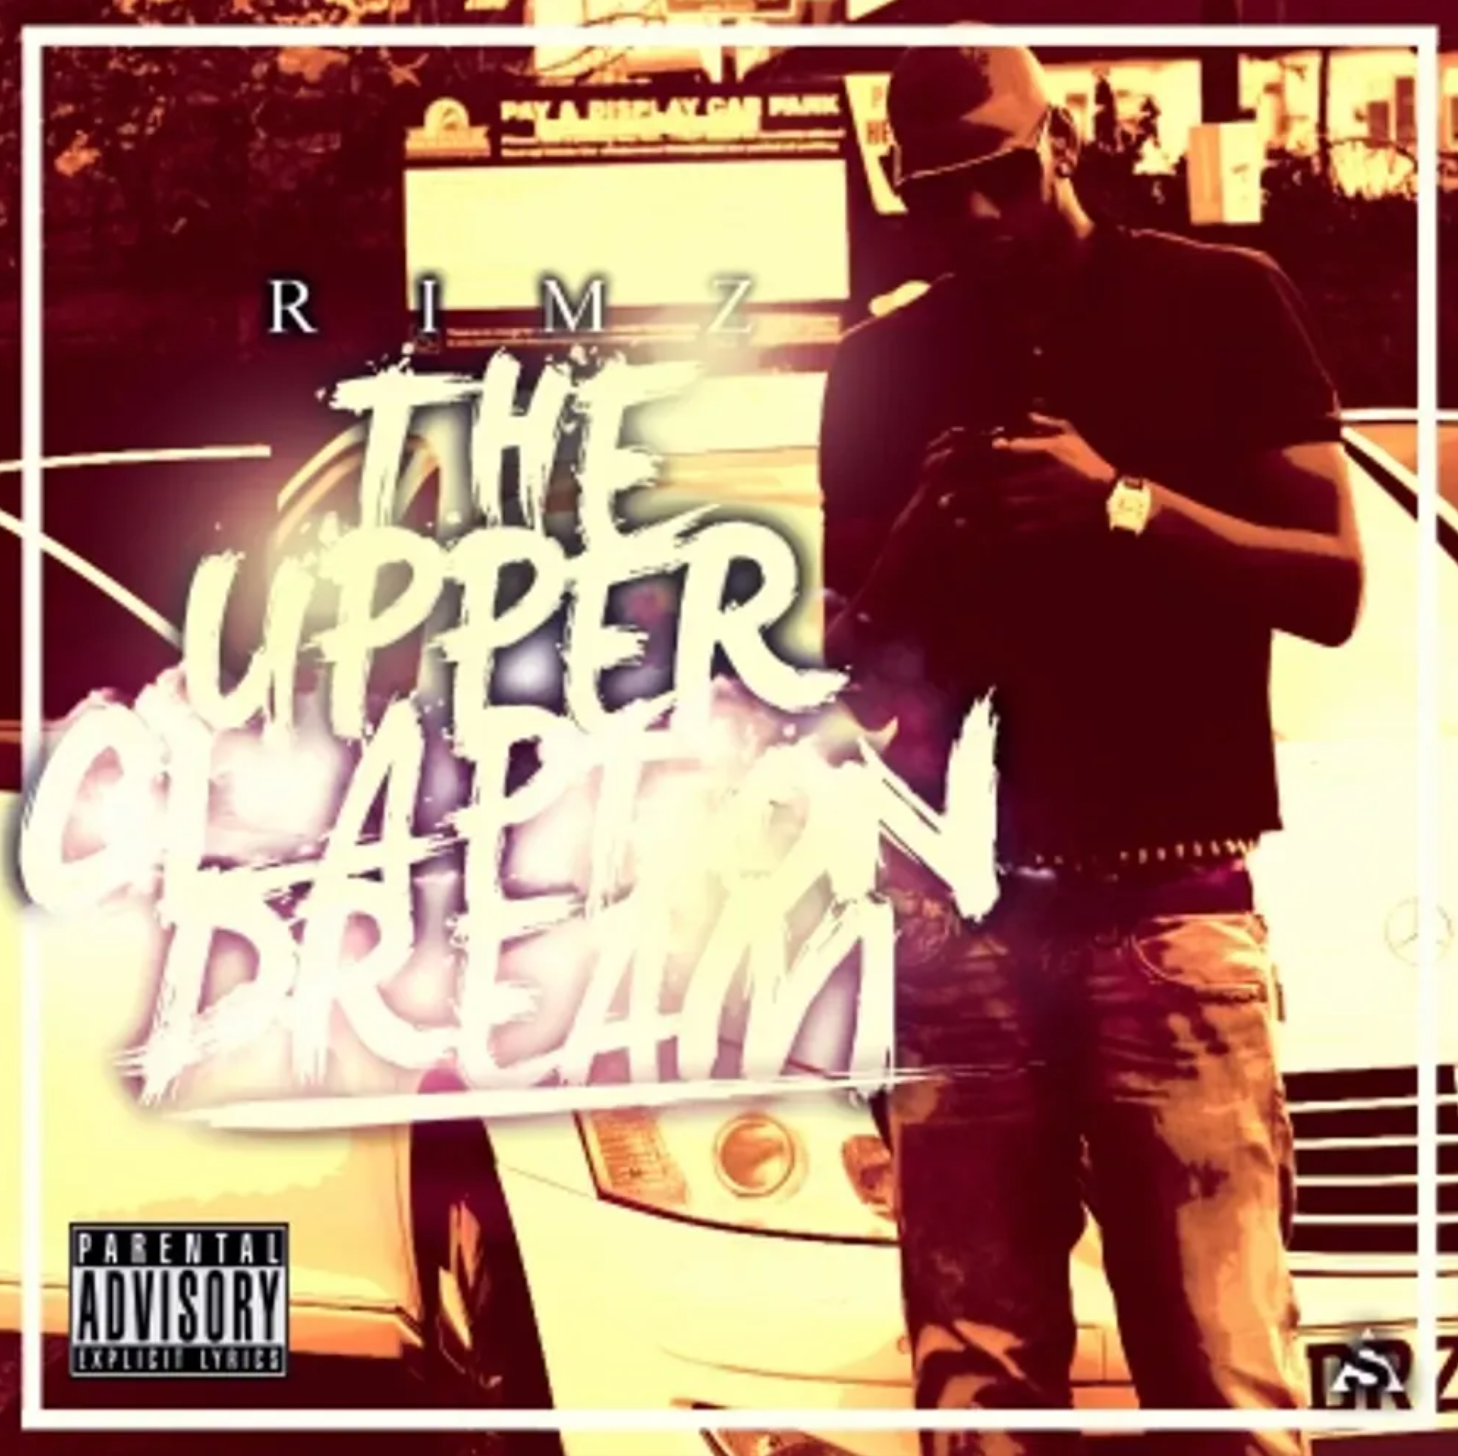 rimzee the upper clapton dream mixtape